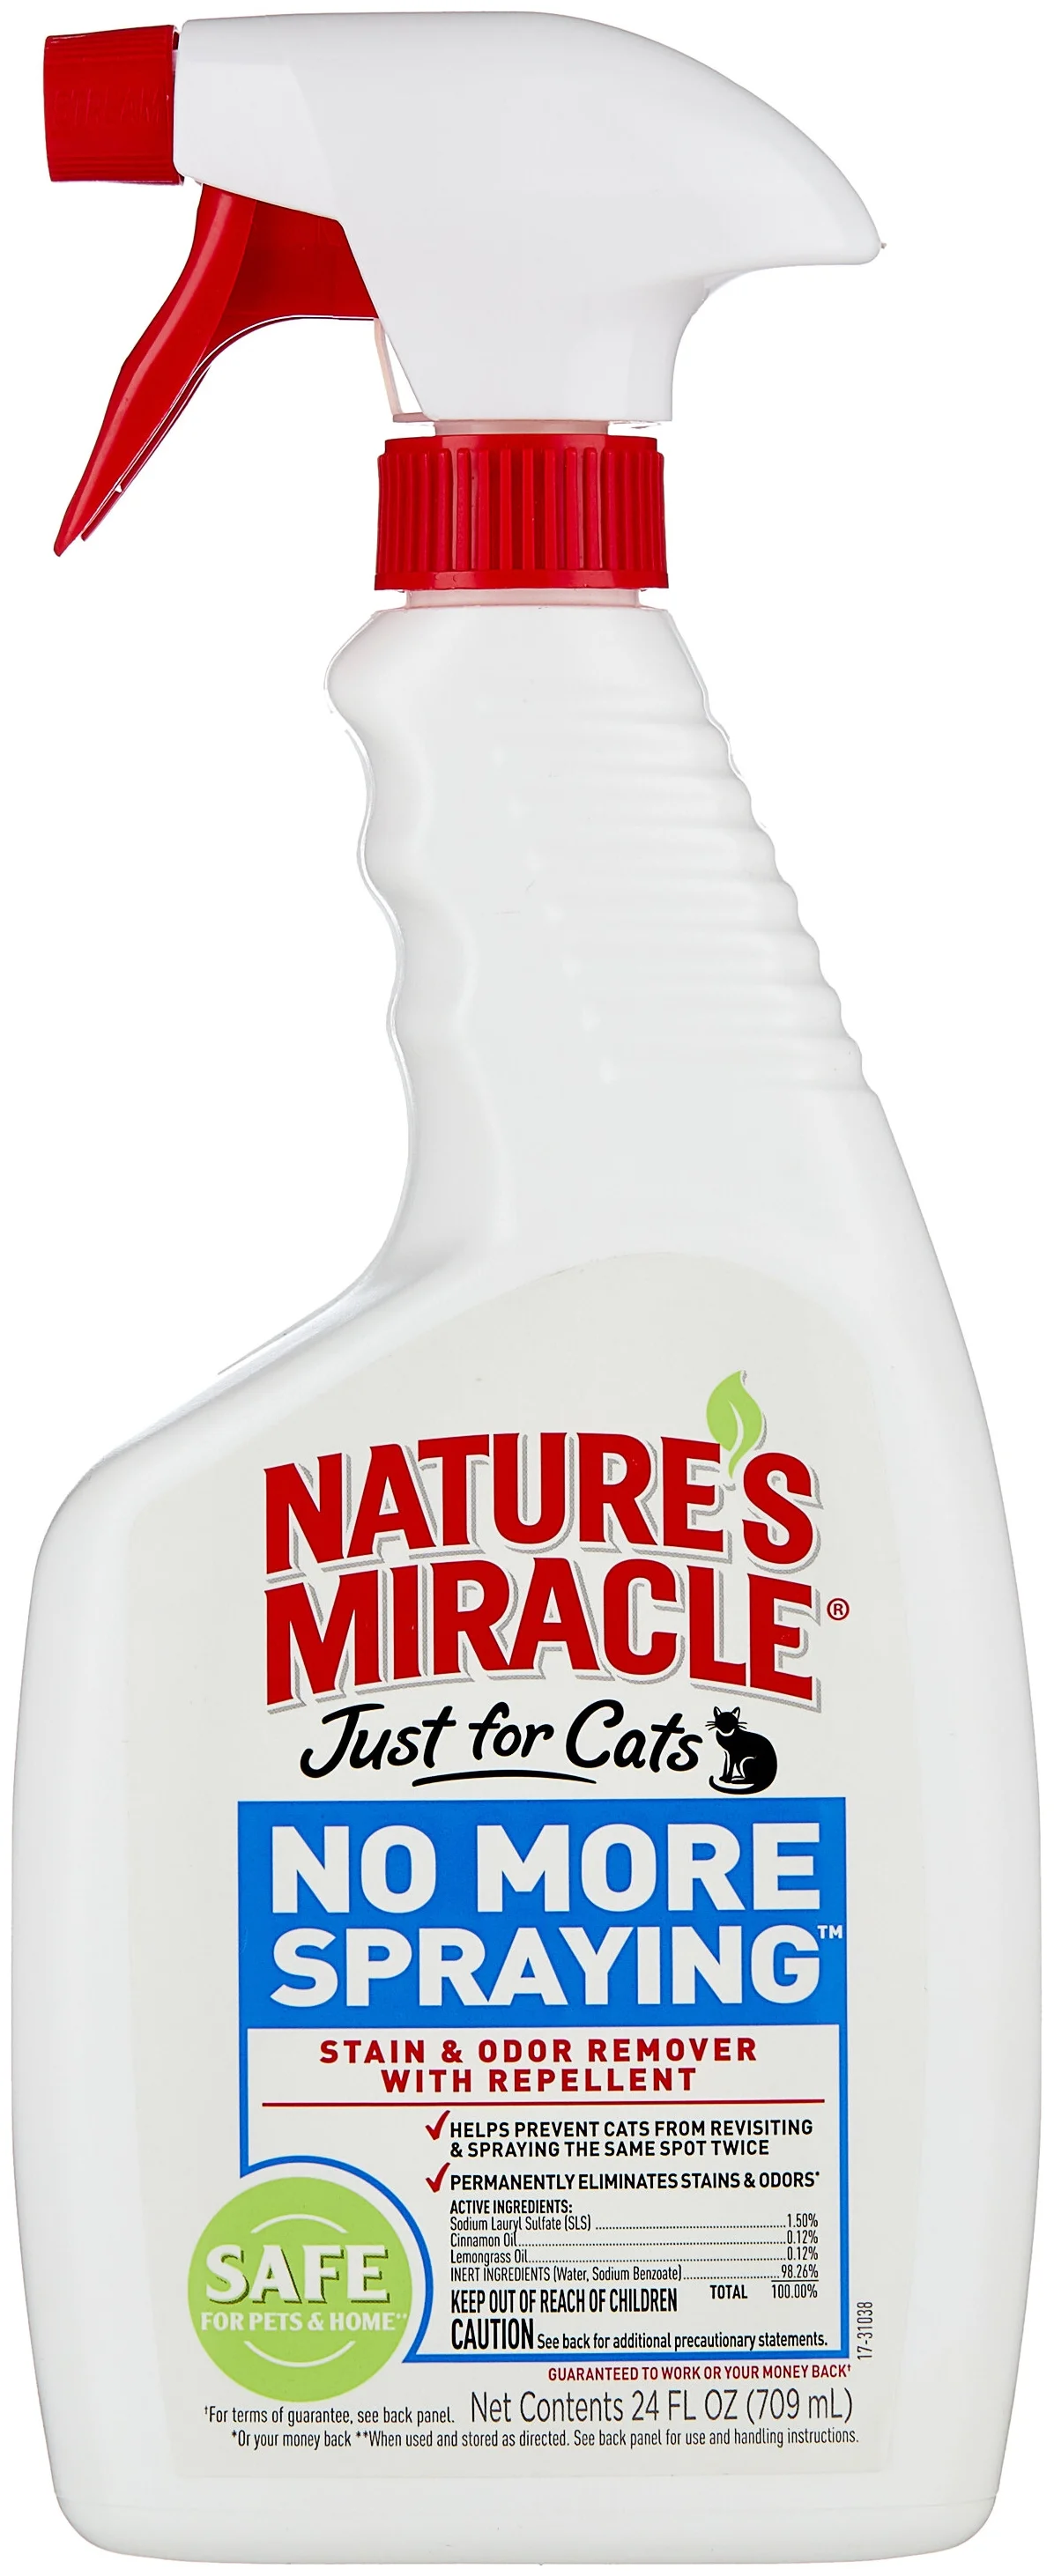 Nature's Miracle "Антигадин для кошек" - спрей